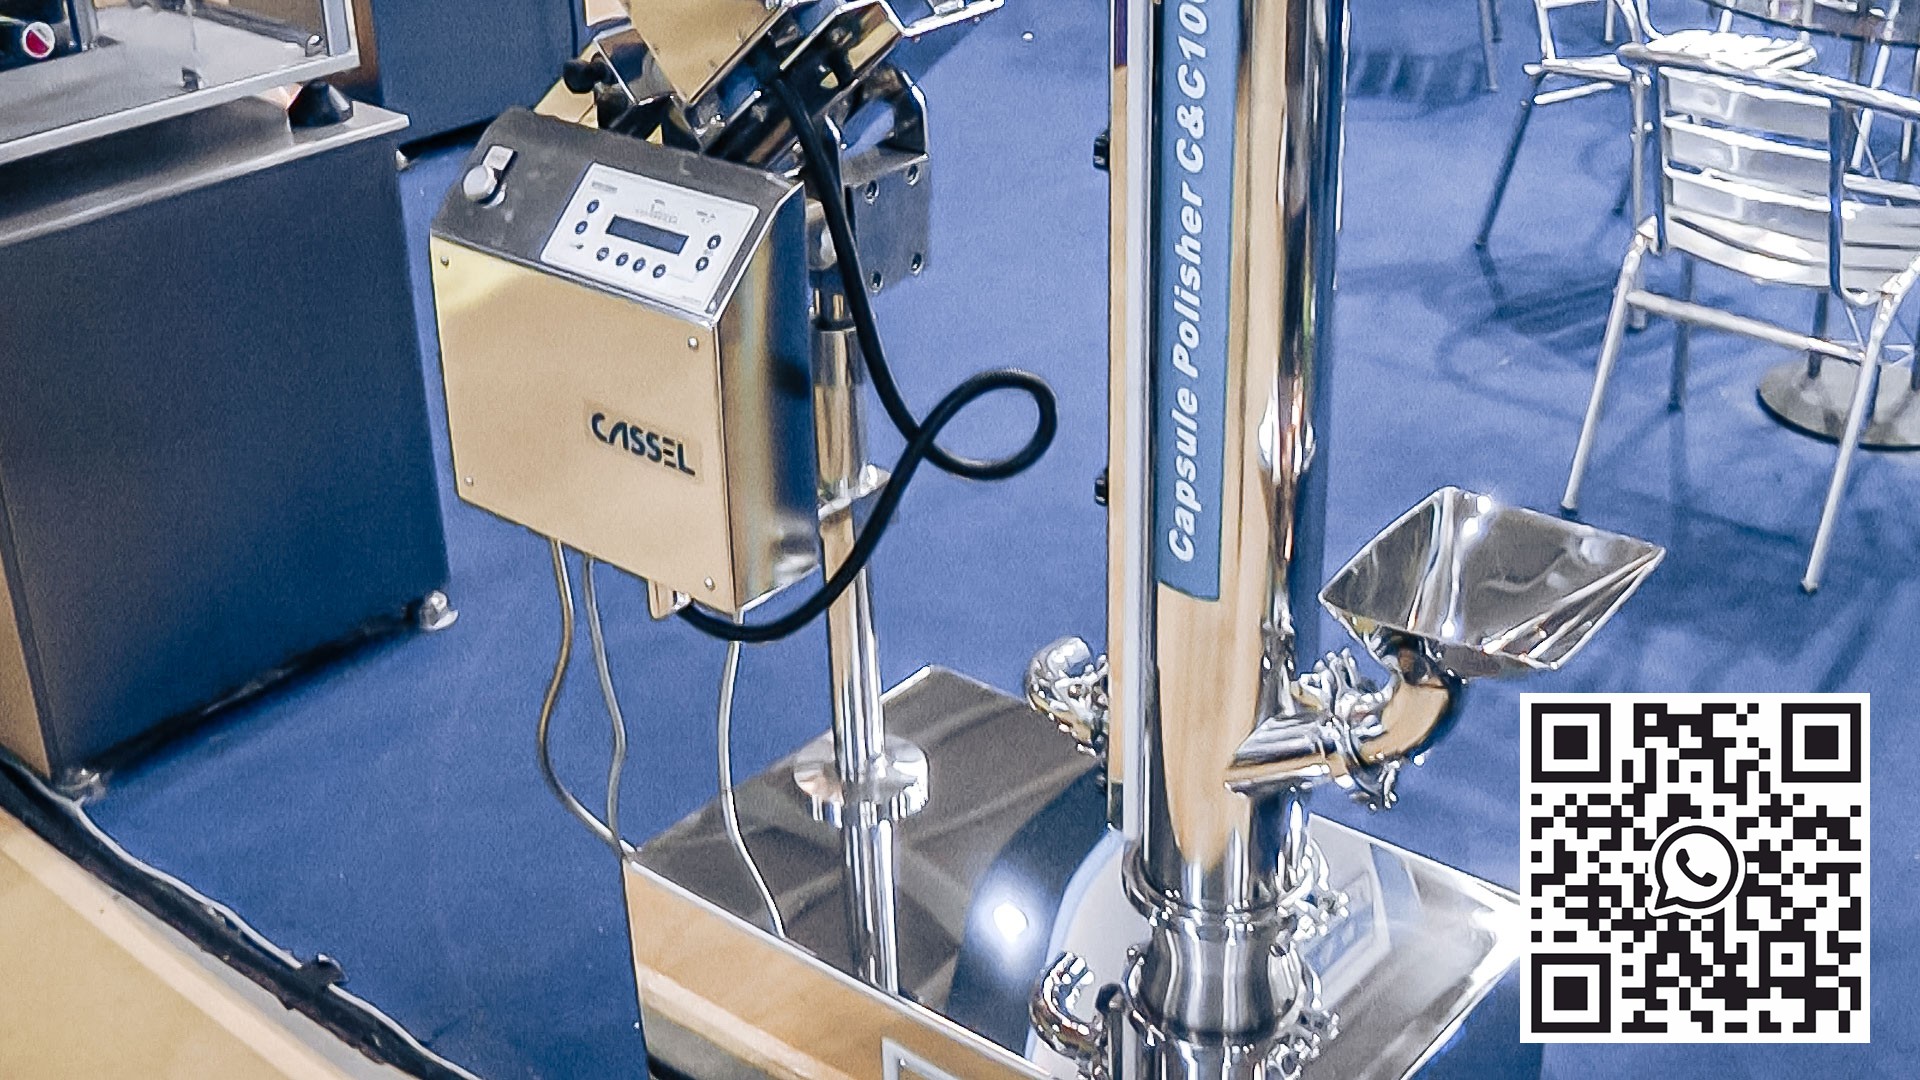 Automatic equipment for polishing gelatin capsules pharmaceutical production